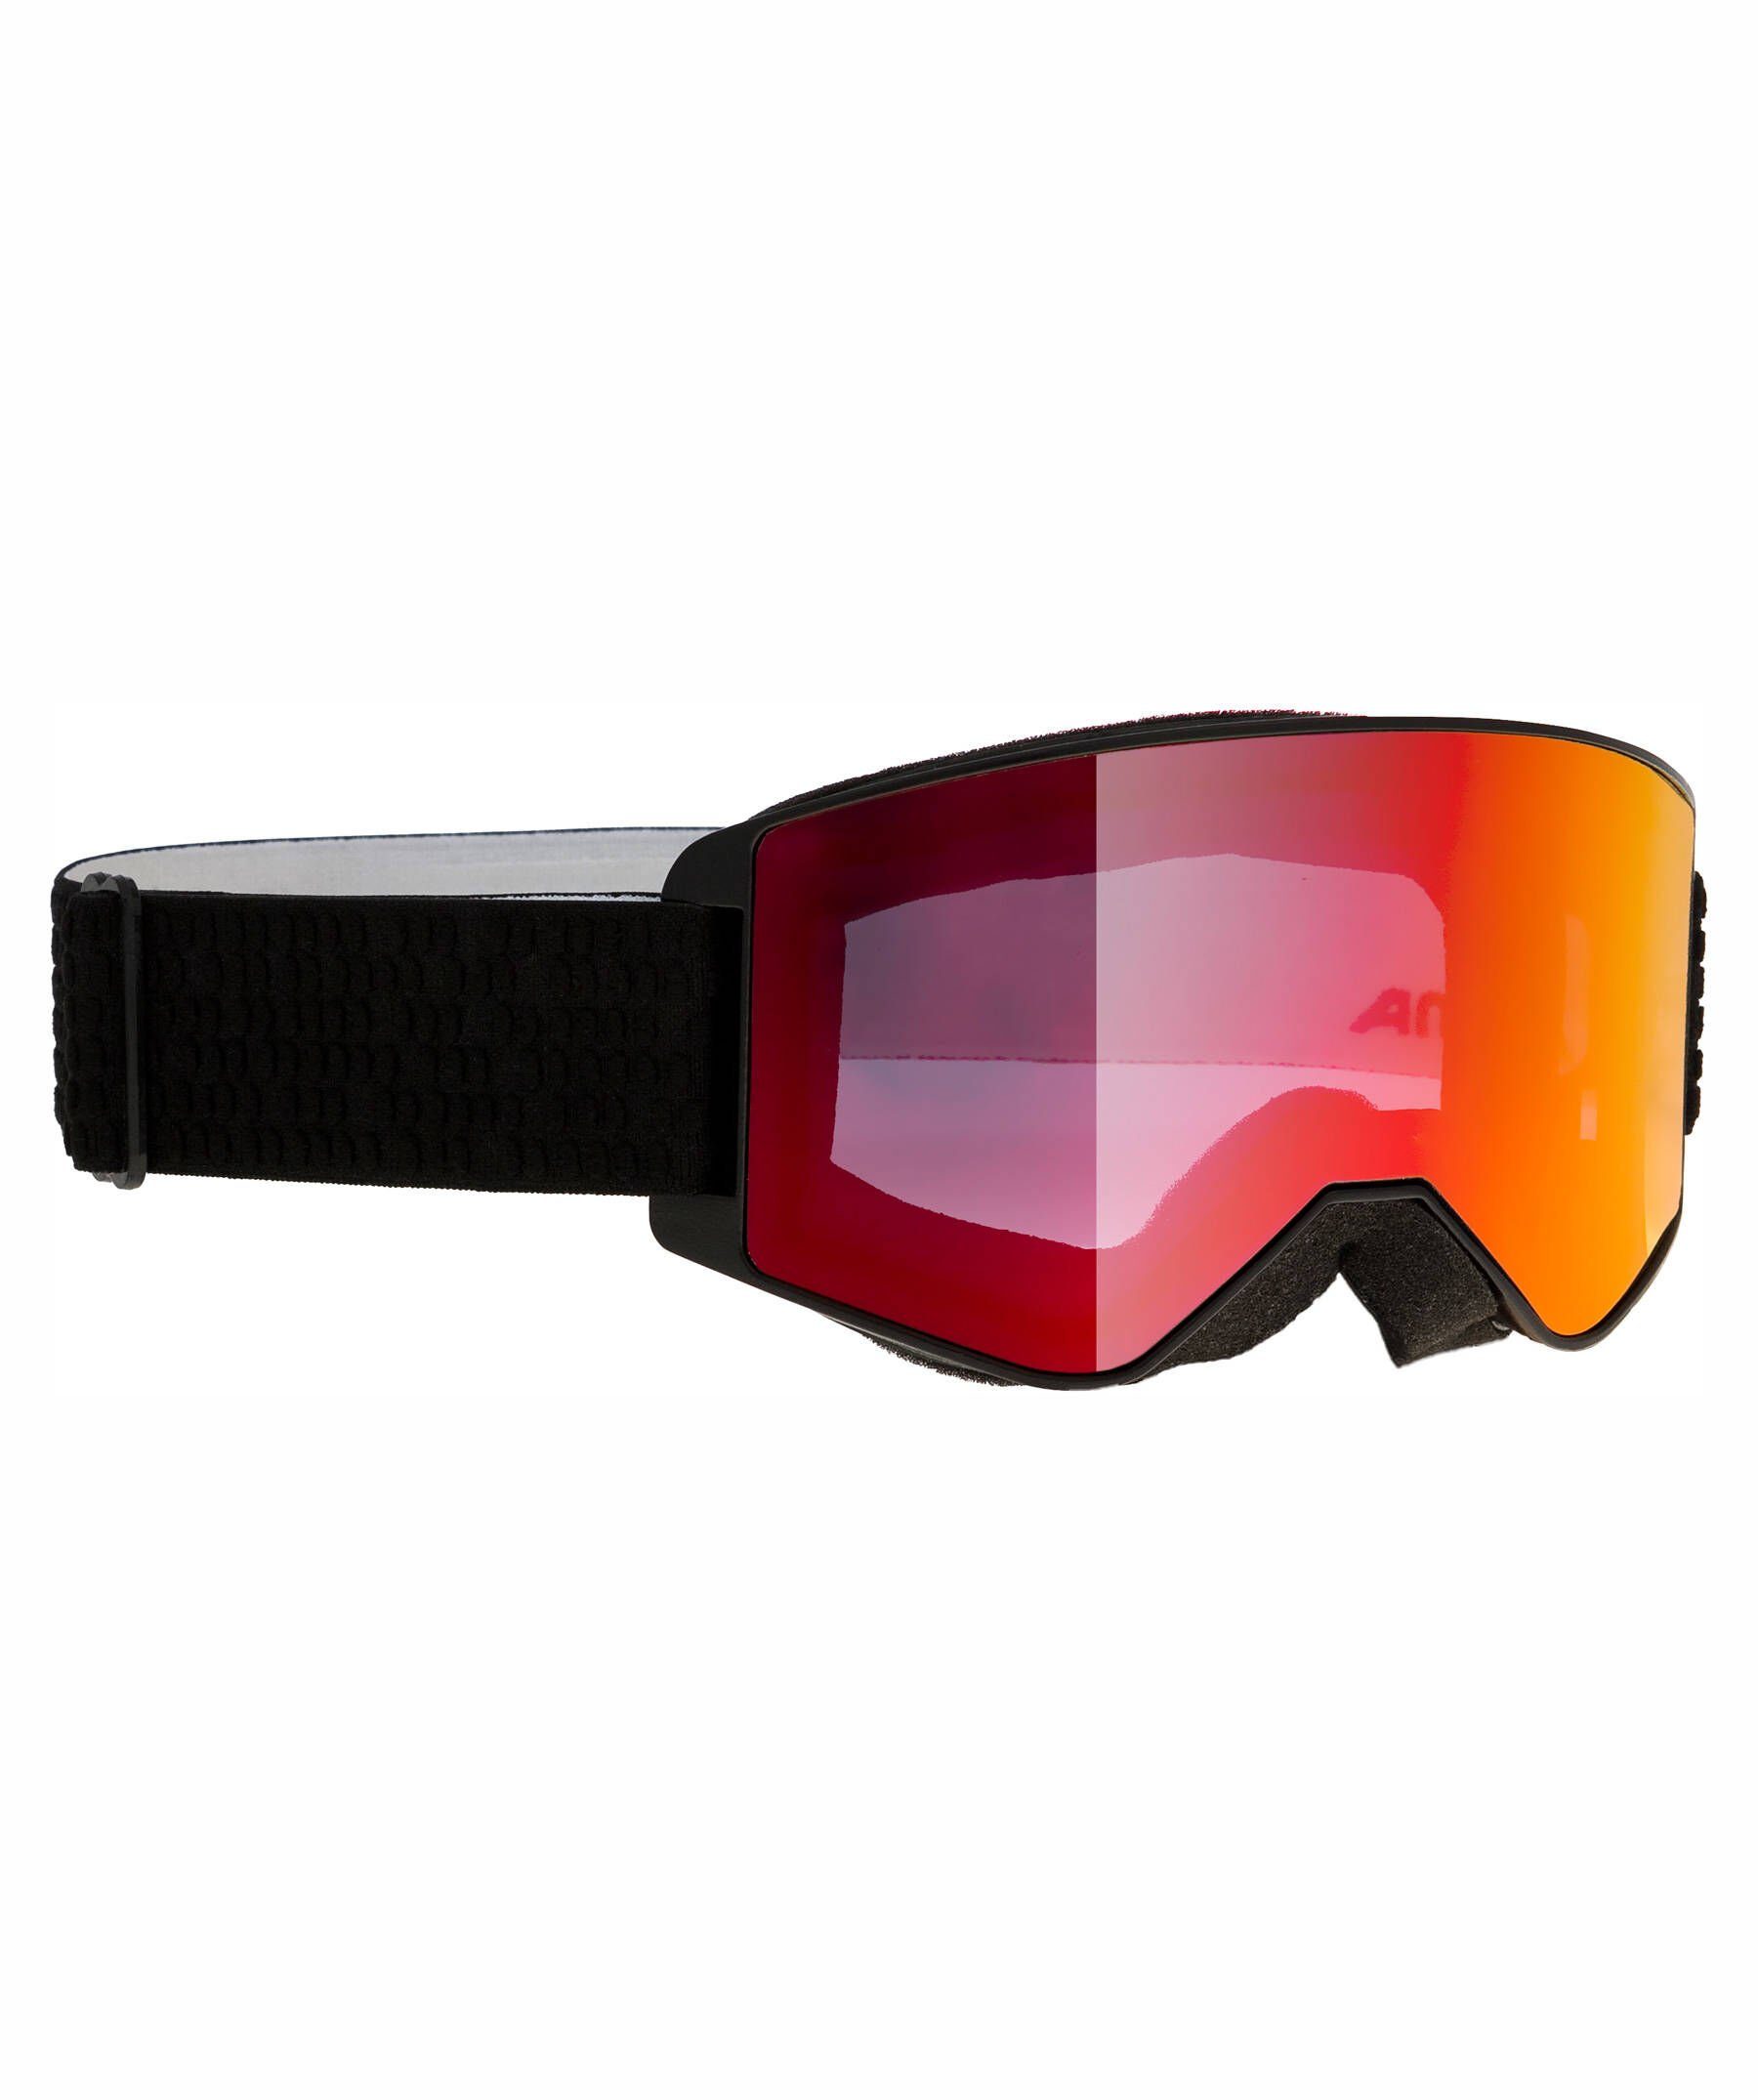 Skibrille Sports "Narkoja" (704) Skibrille schwarz/orange Alpina